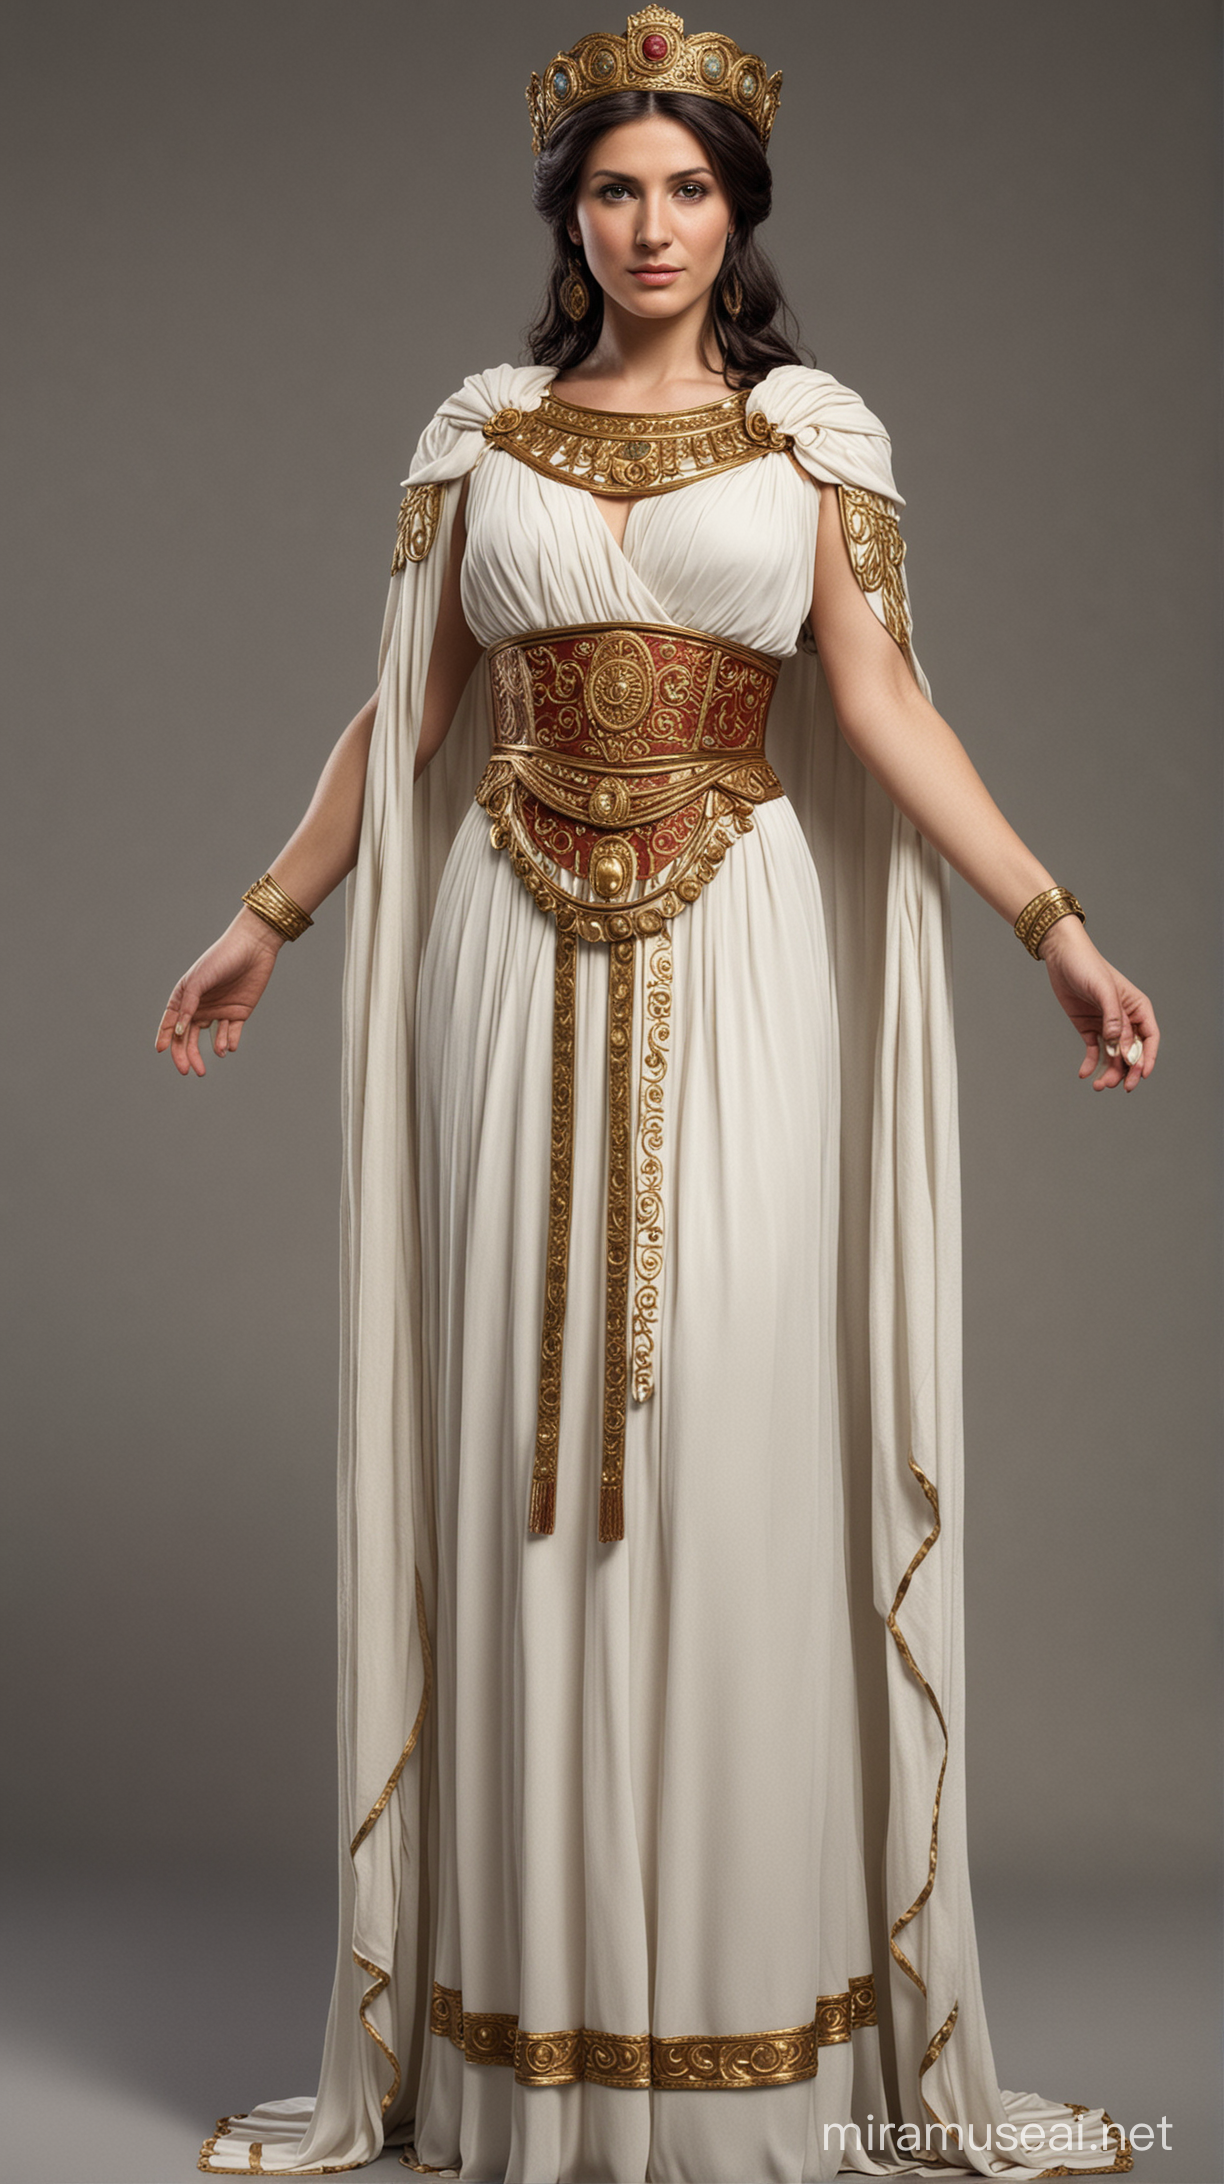 Roman empress full body